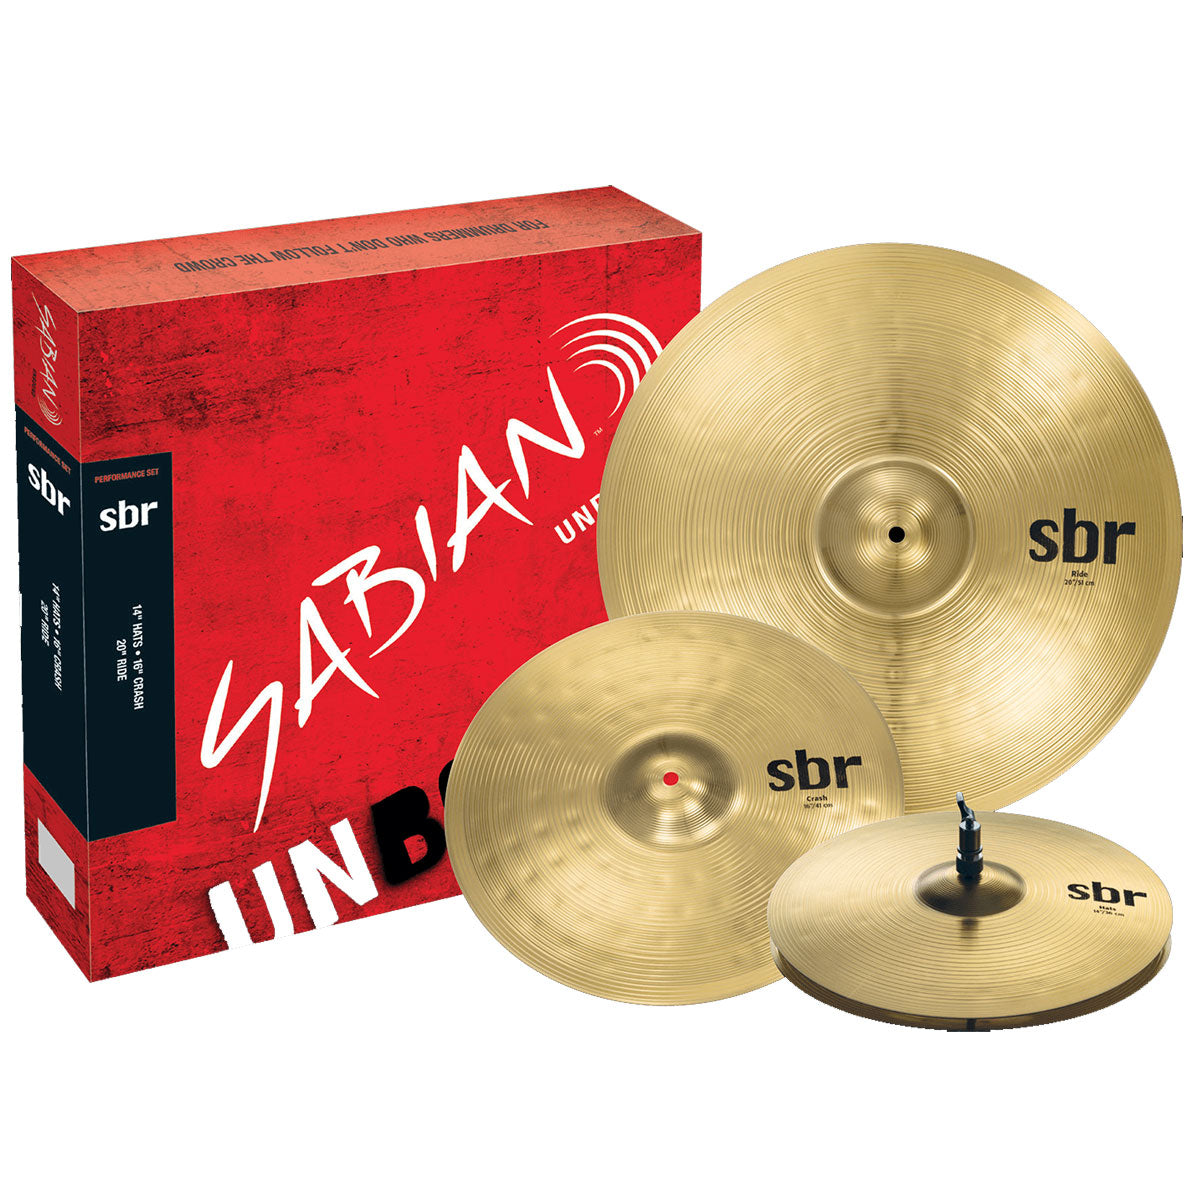 Sabian SBR Performance Cymbal Set